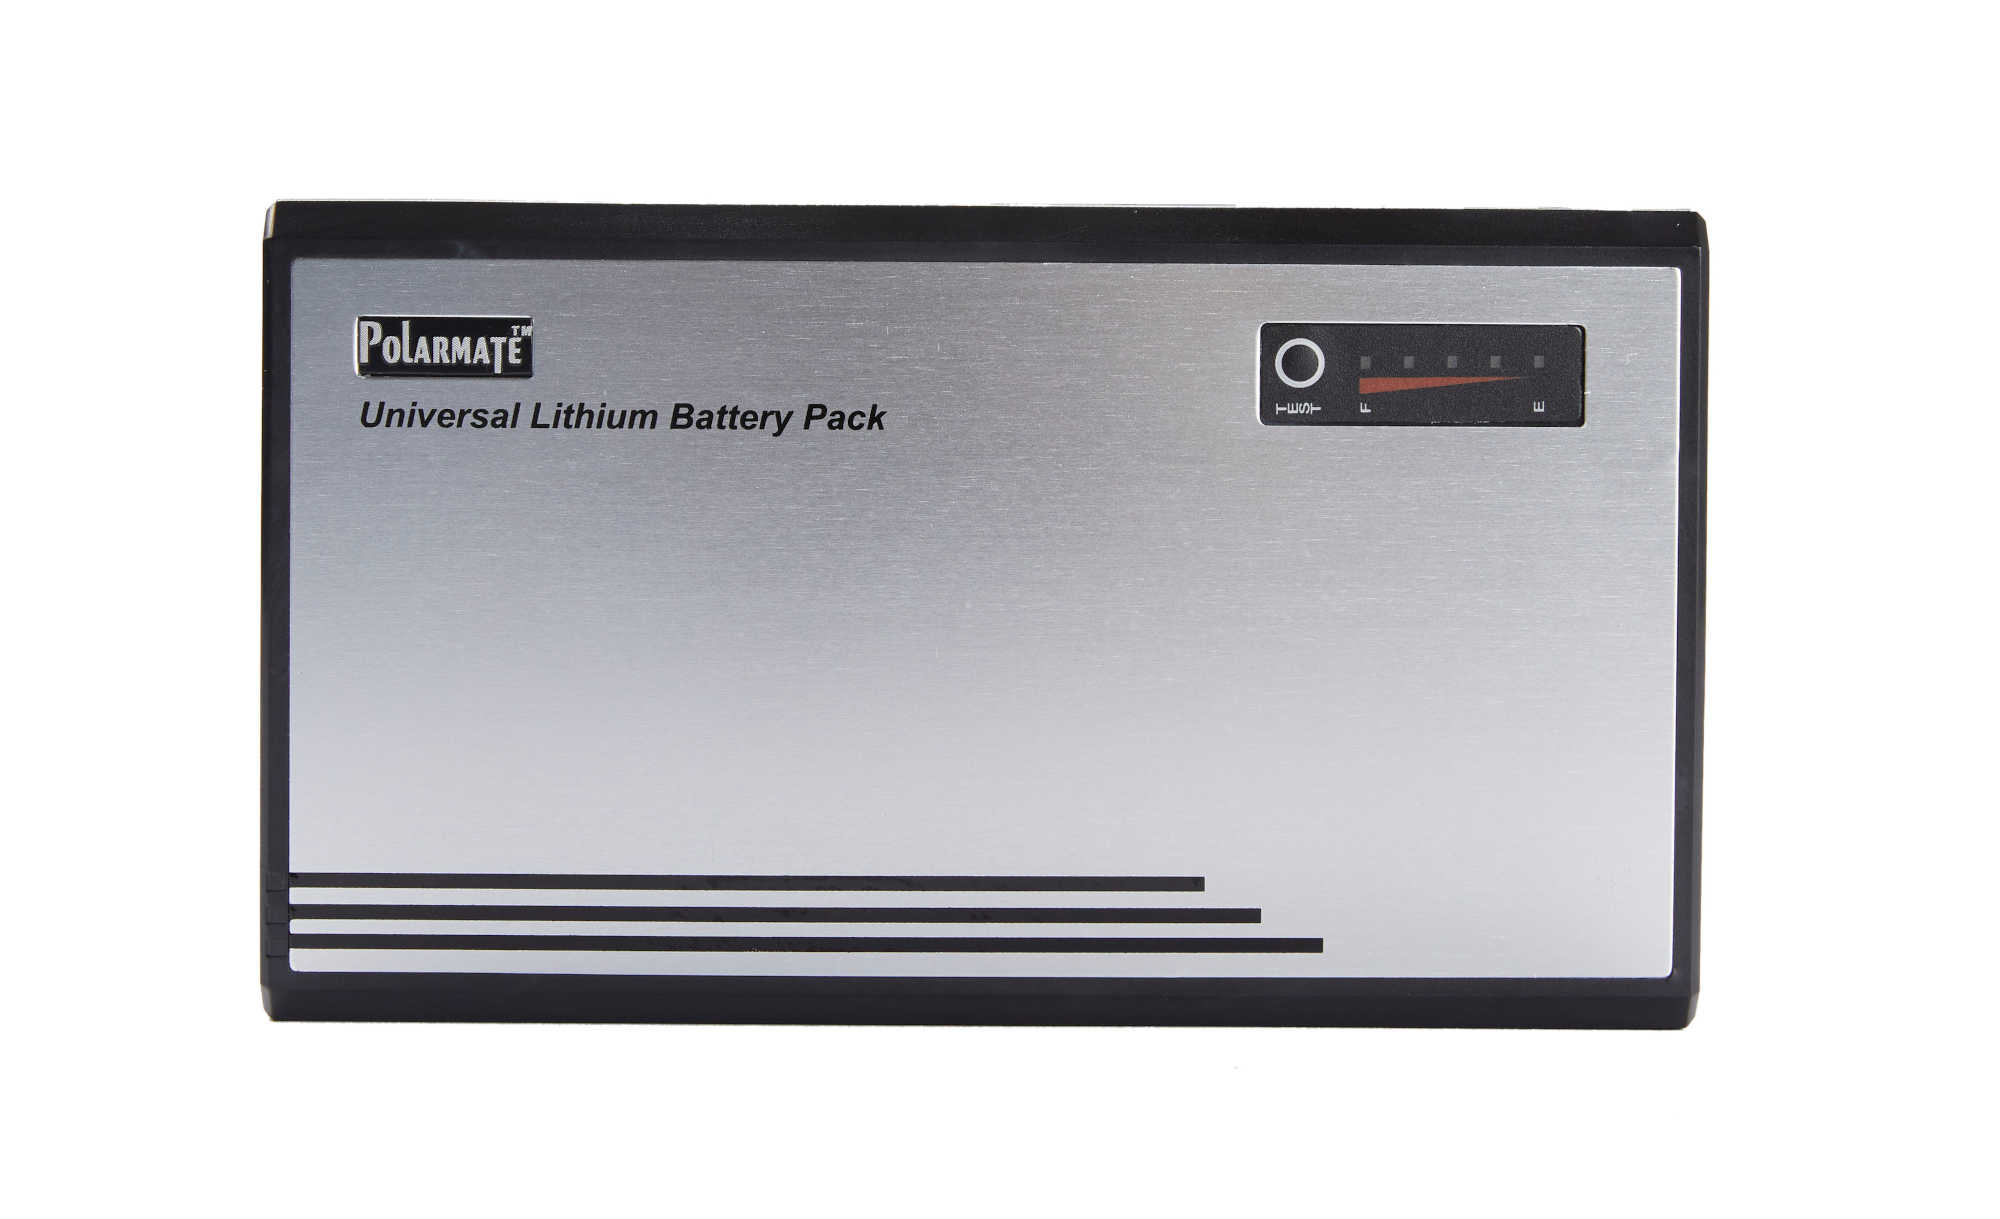 Li-Ion Battery